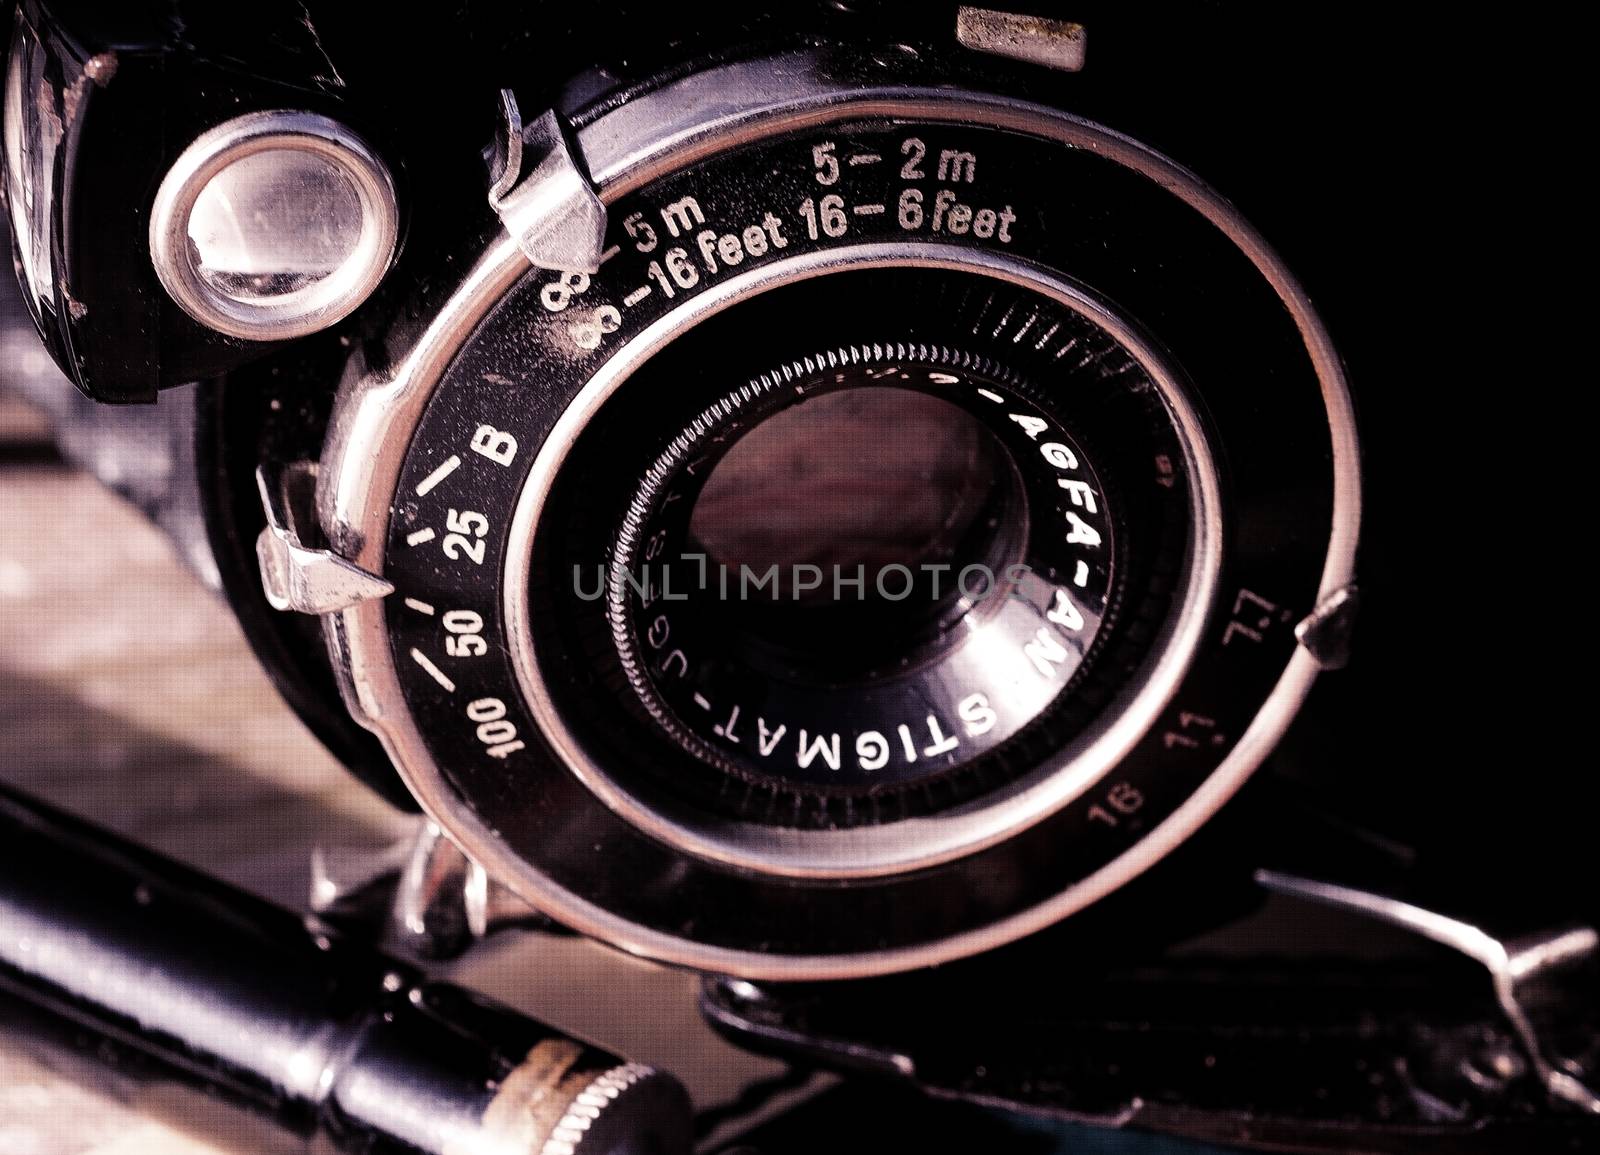 Vintage photographic camera by JRTBurr